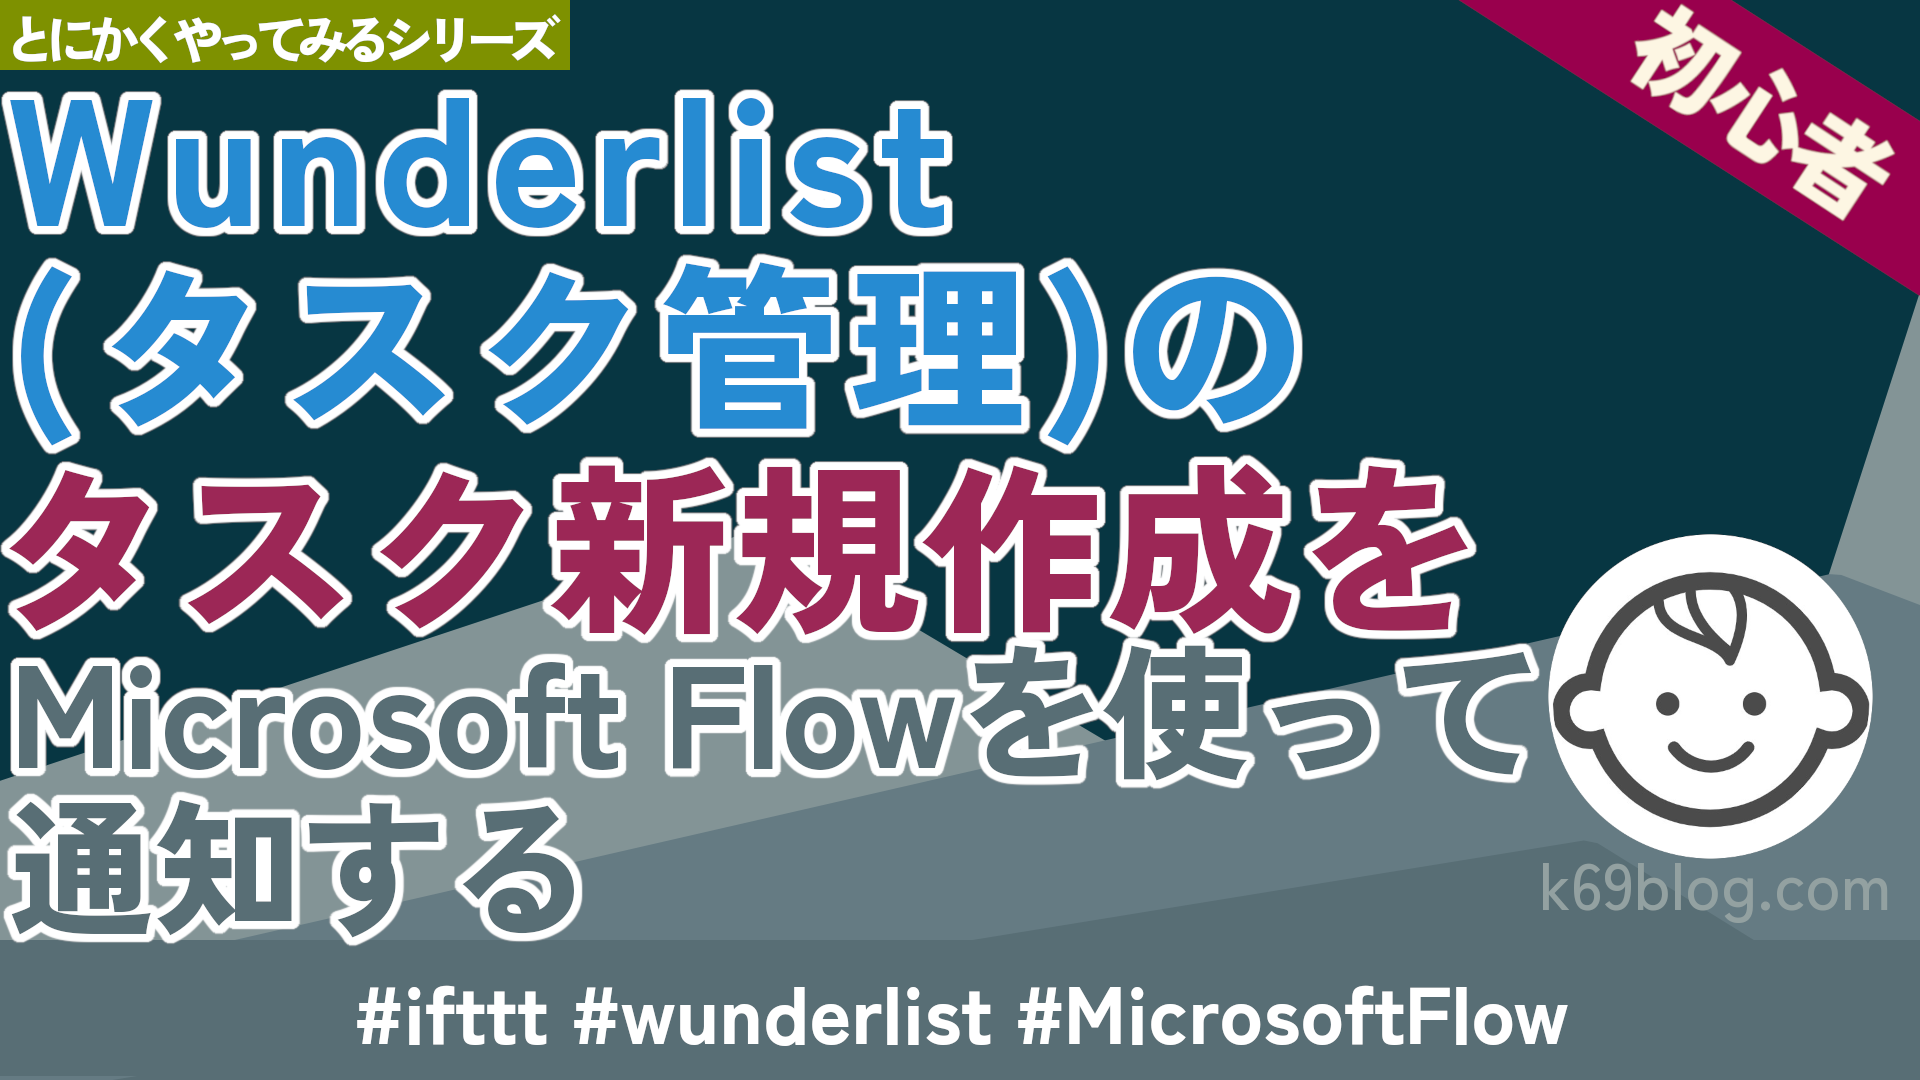 Cover Image for Wunderlist(タスク管理)のタスク新規作成をMicrosoft Flowを使って通知する